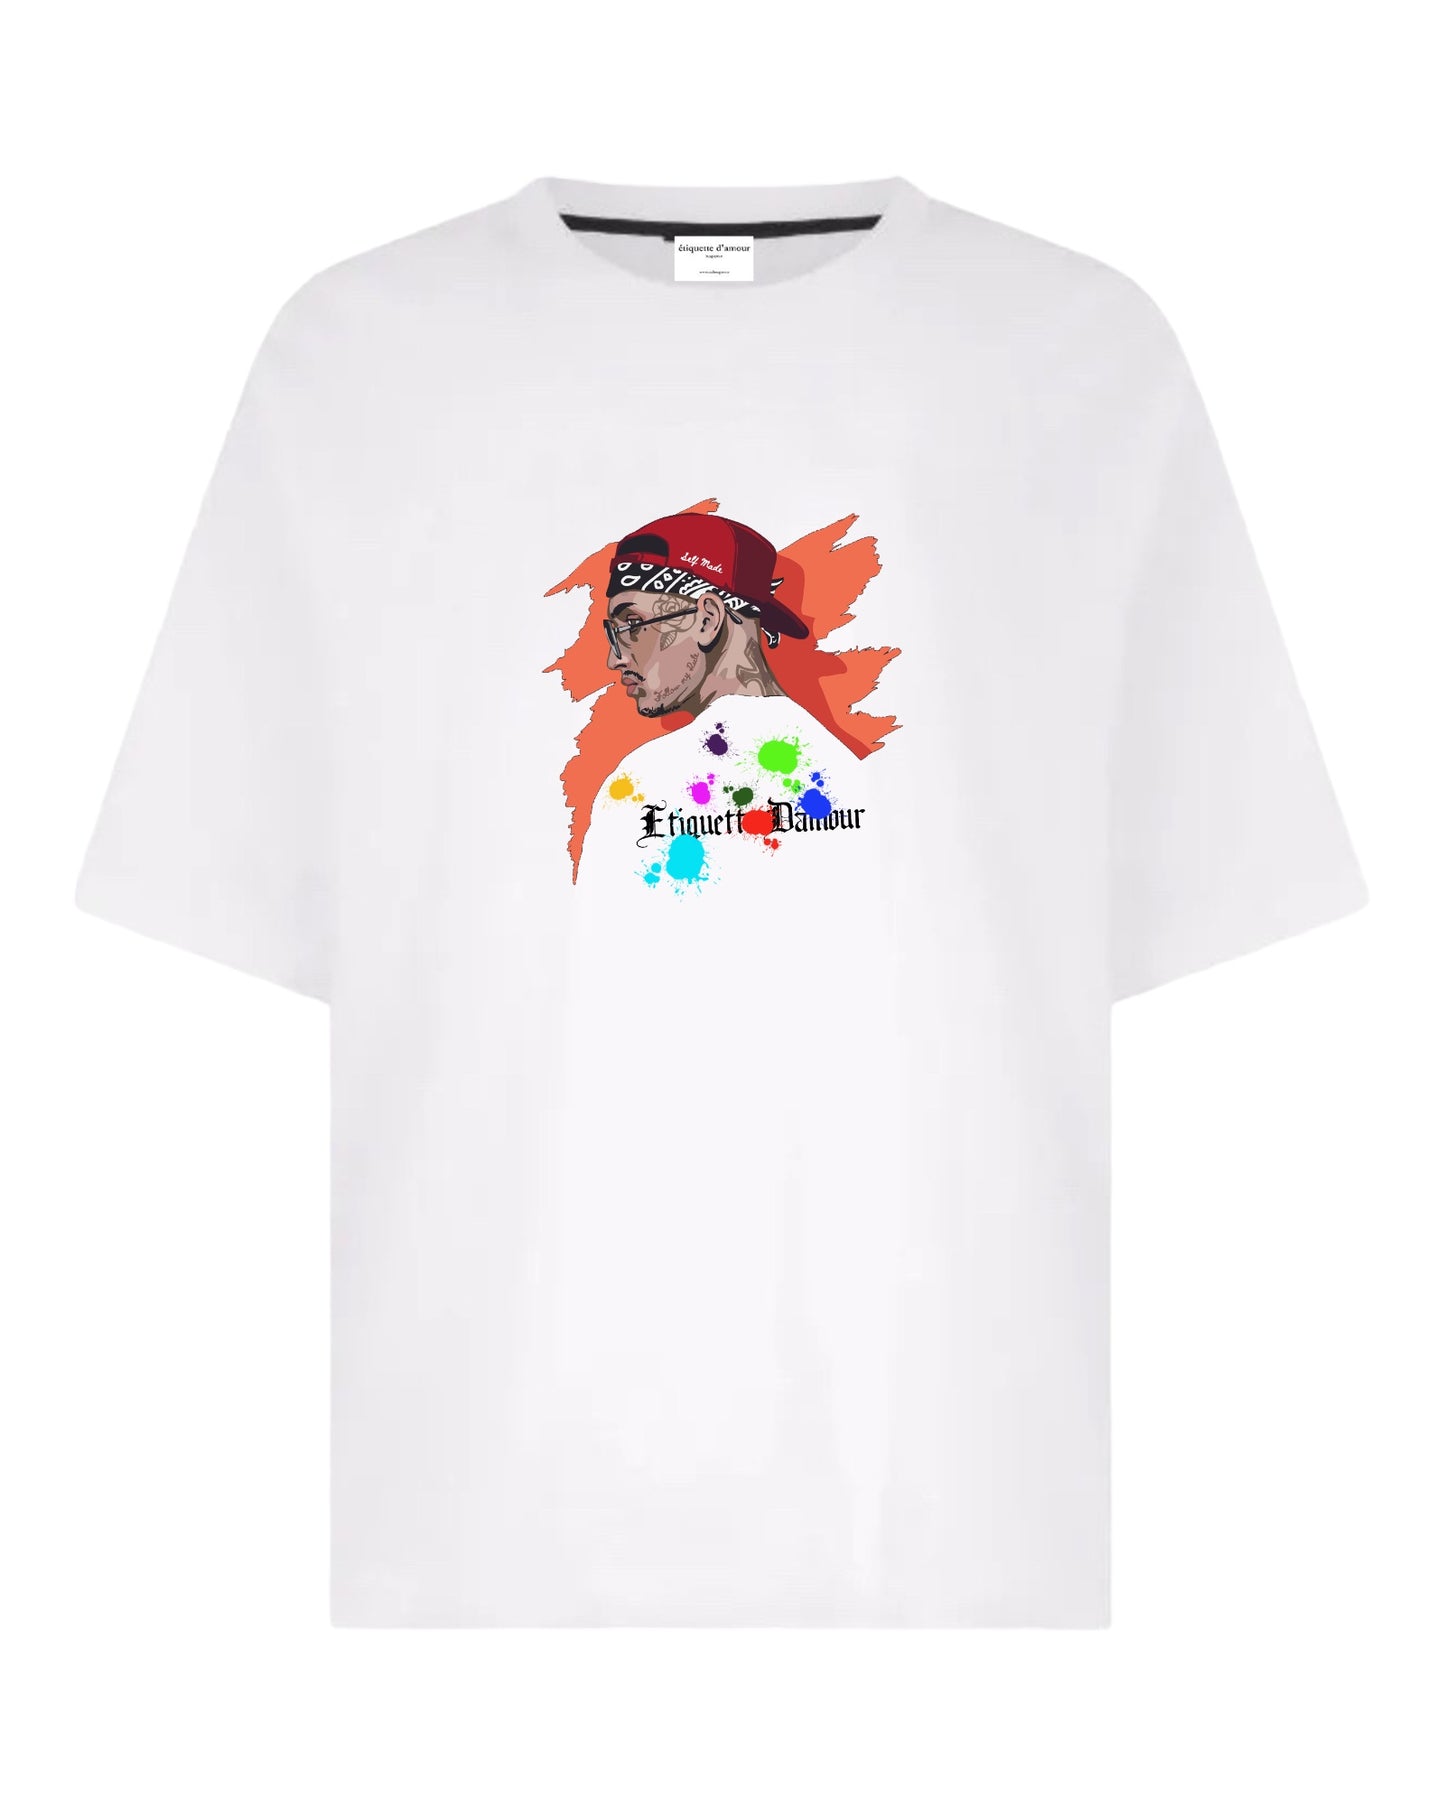 "Dapper Dude in Damour Threads" Unisex Oversized T-Shirt